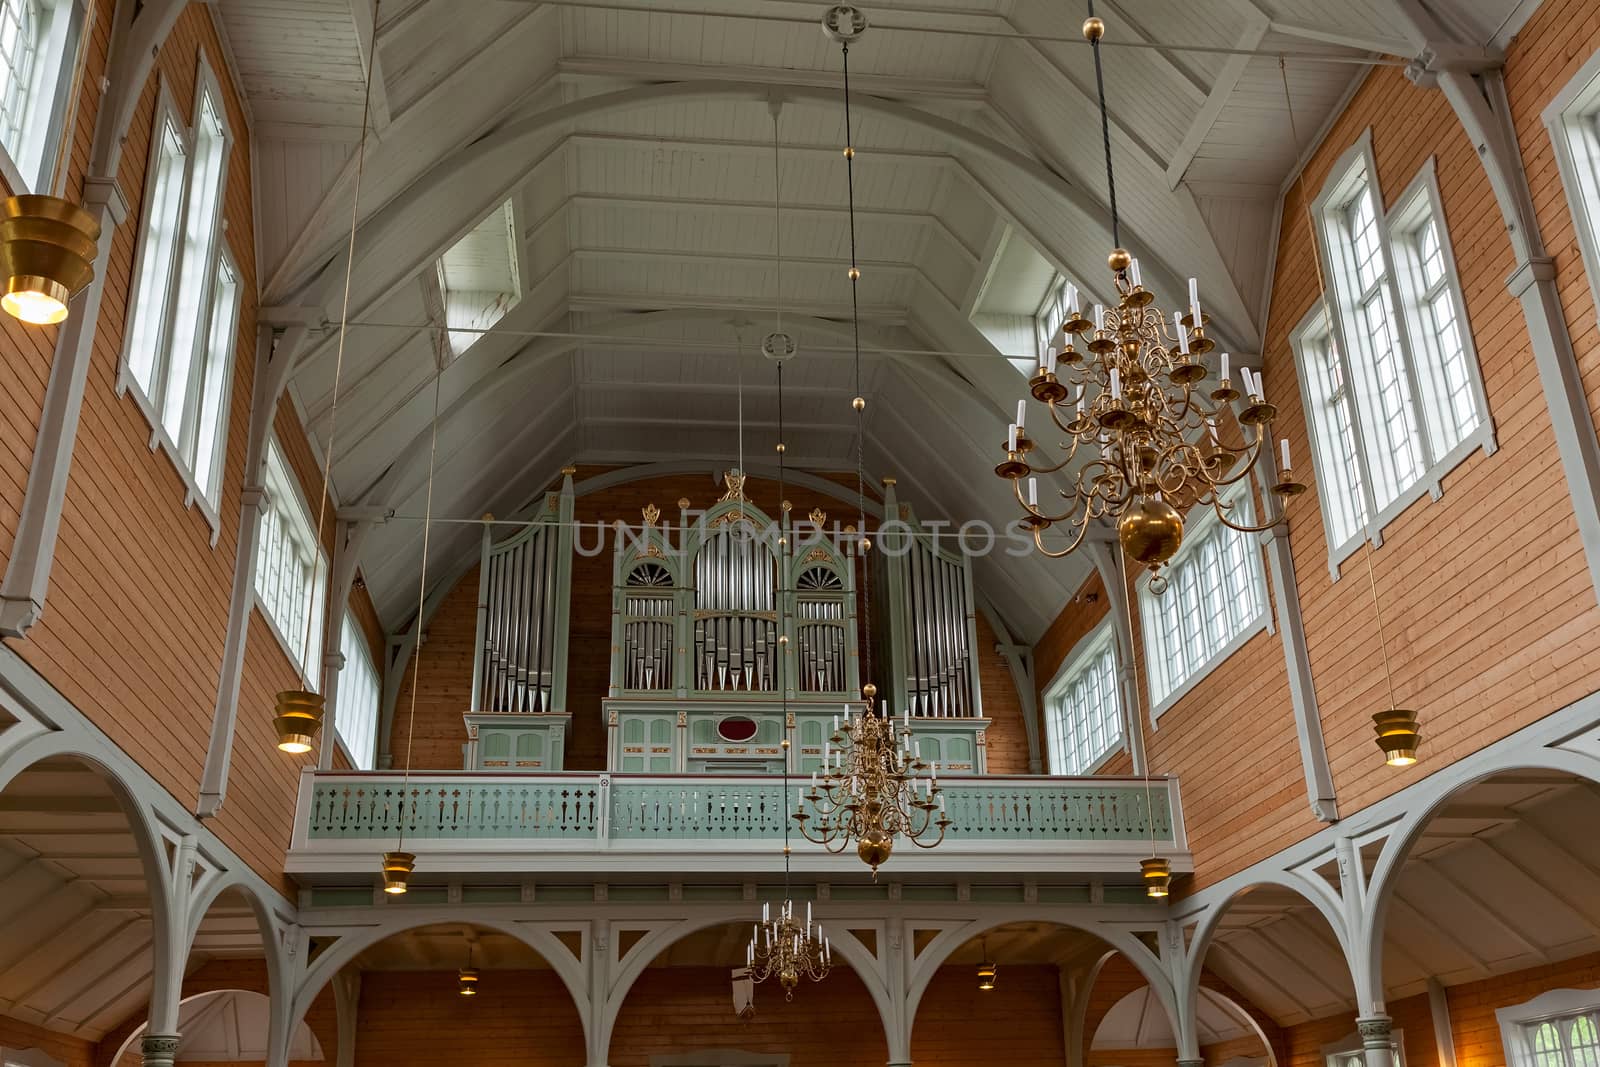 Pipe organ inside the Buksnes church in Gravdal city, Norway by LuigiMorbidelli